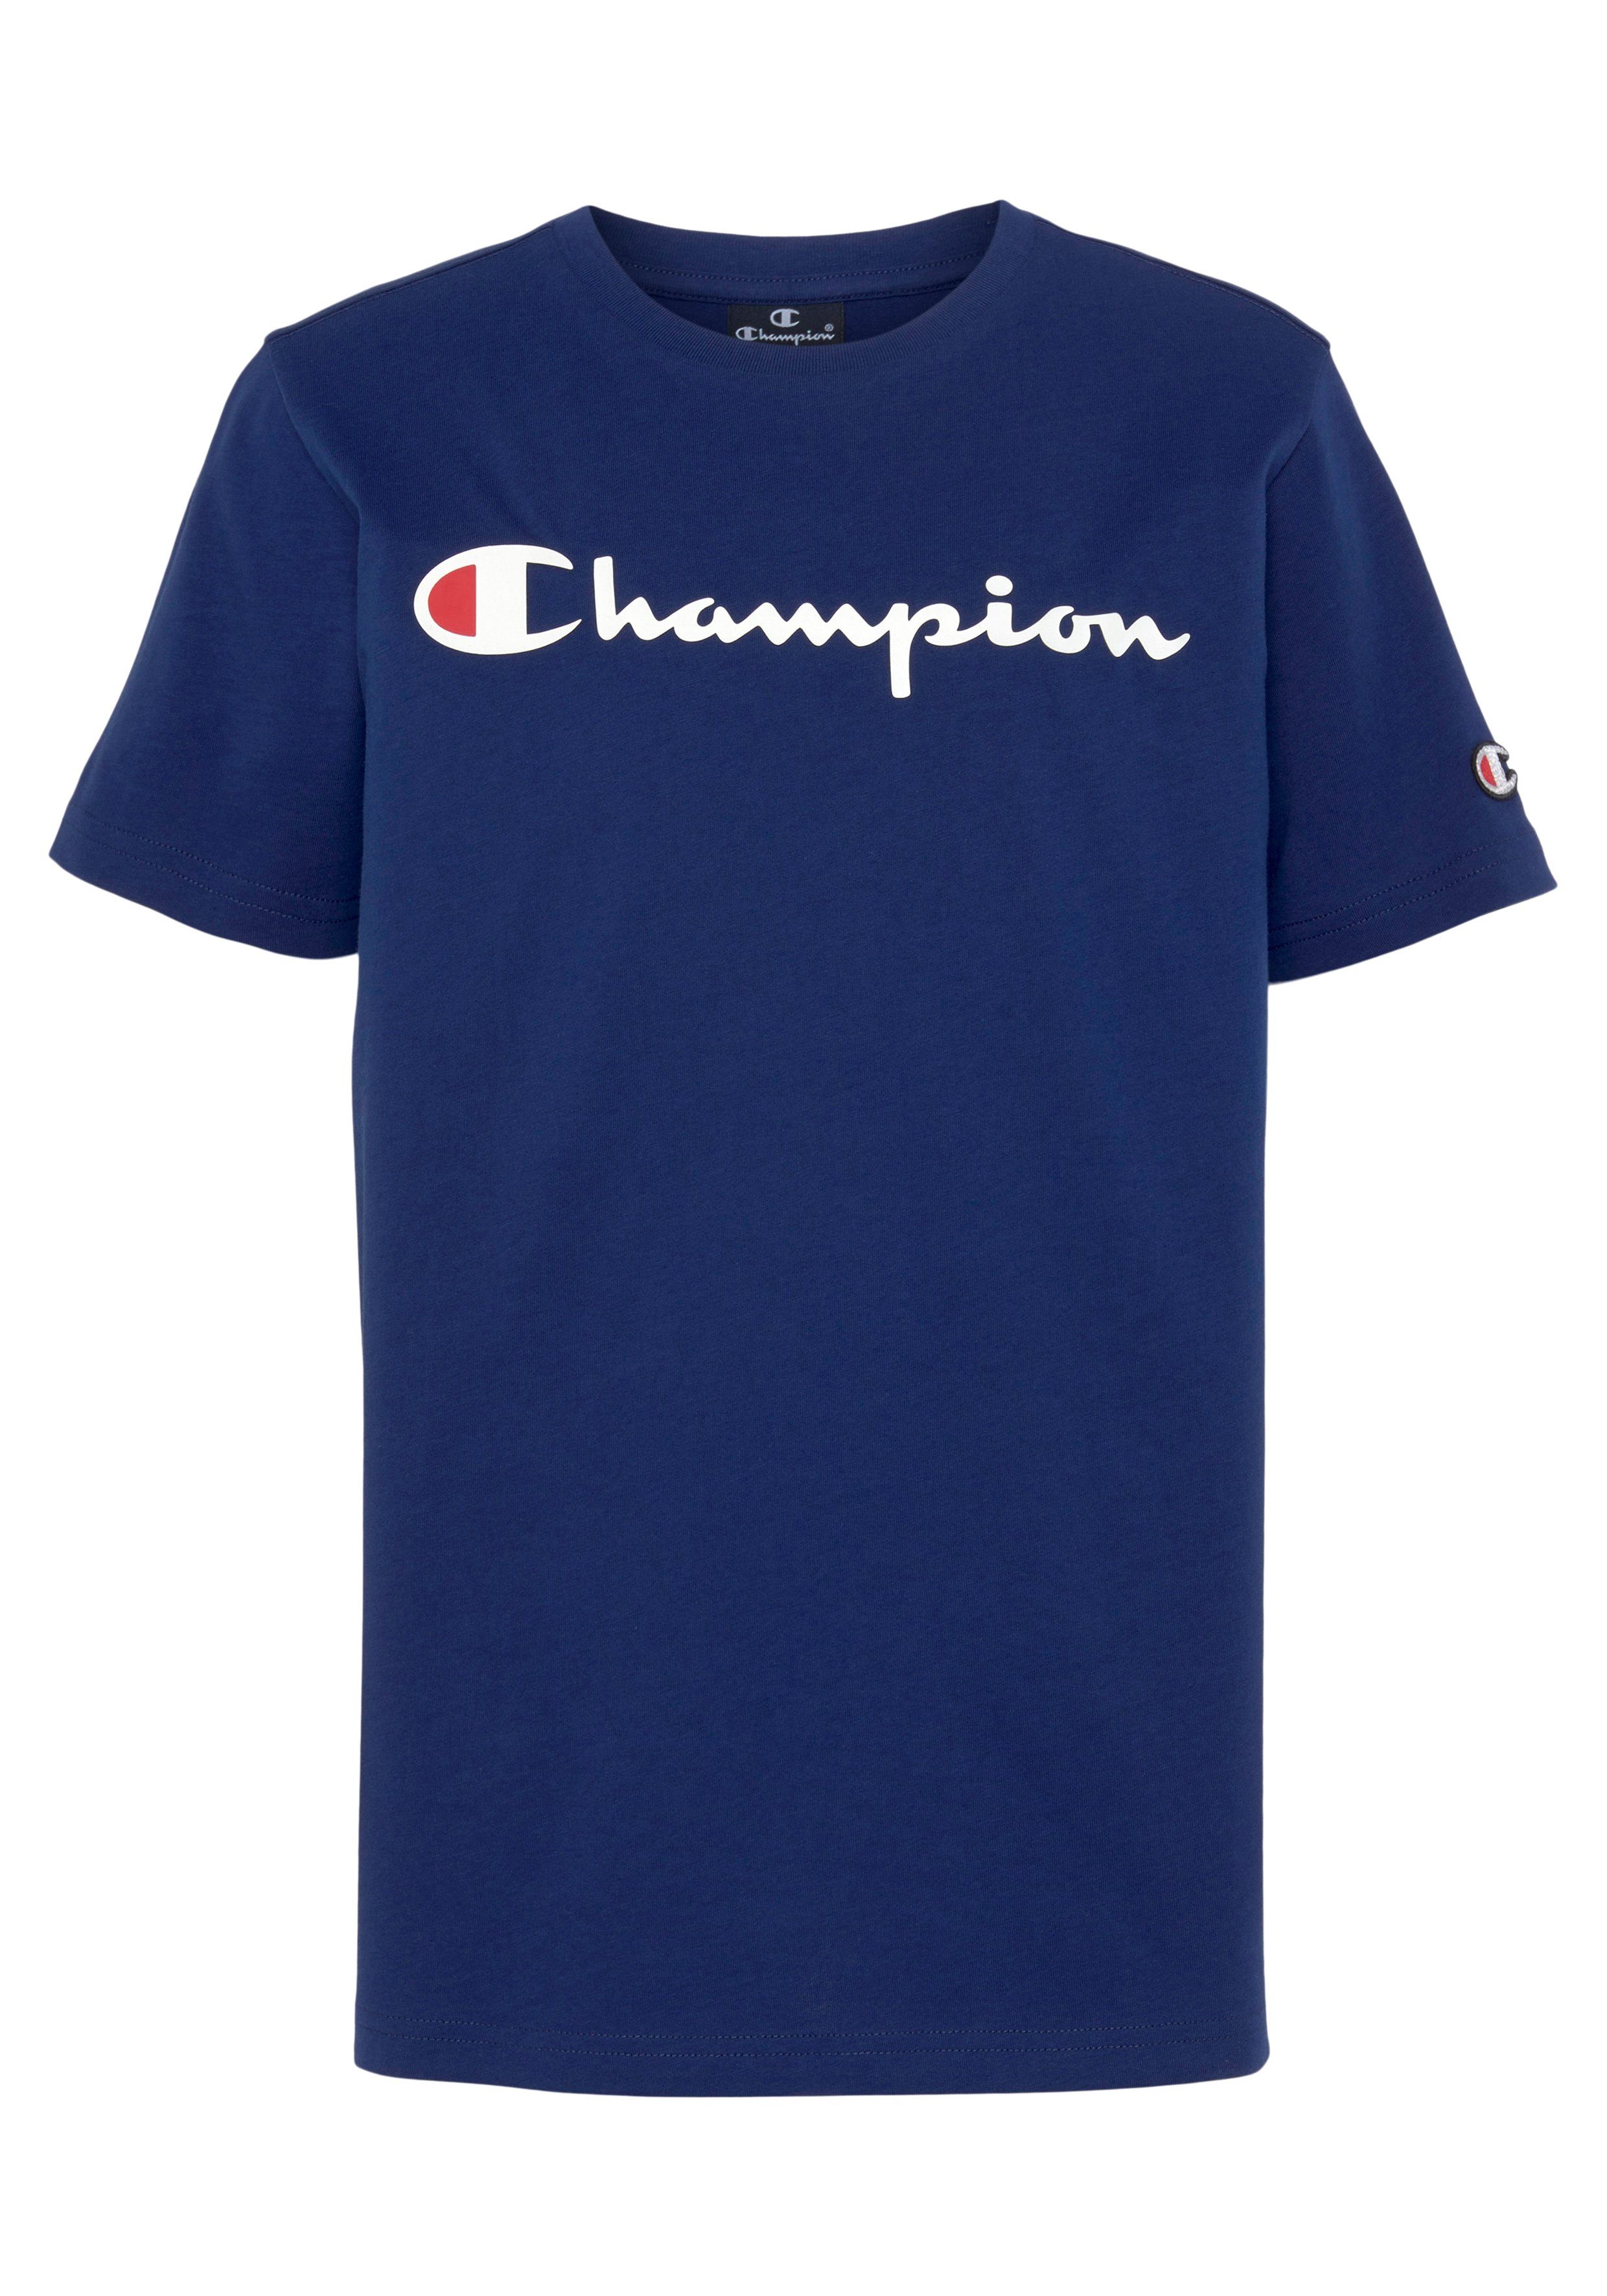 Champion T-Shirt blau Classic Crewneck Kinder large T-Shirt - Logo für